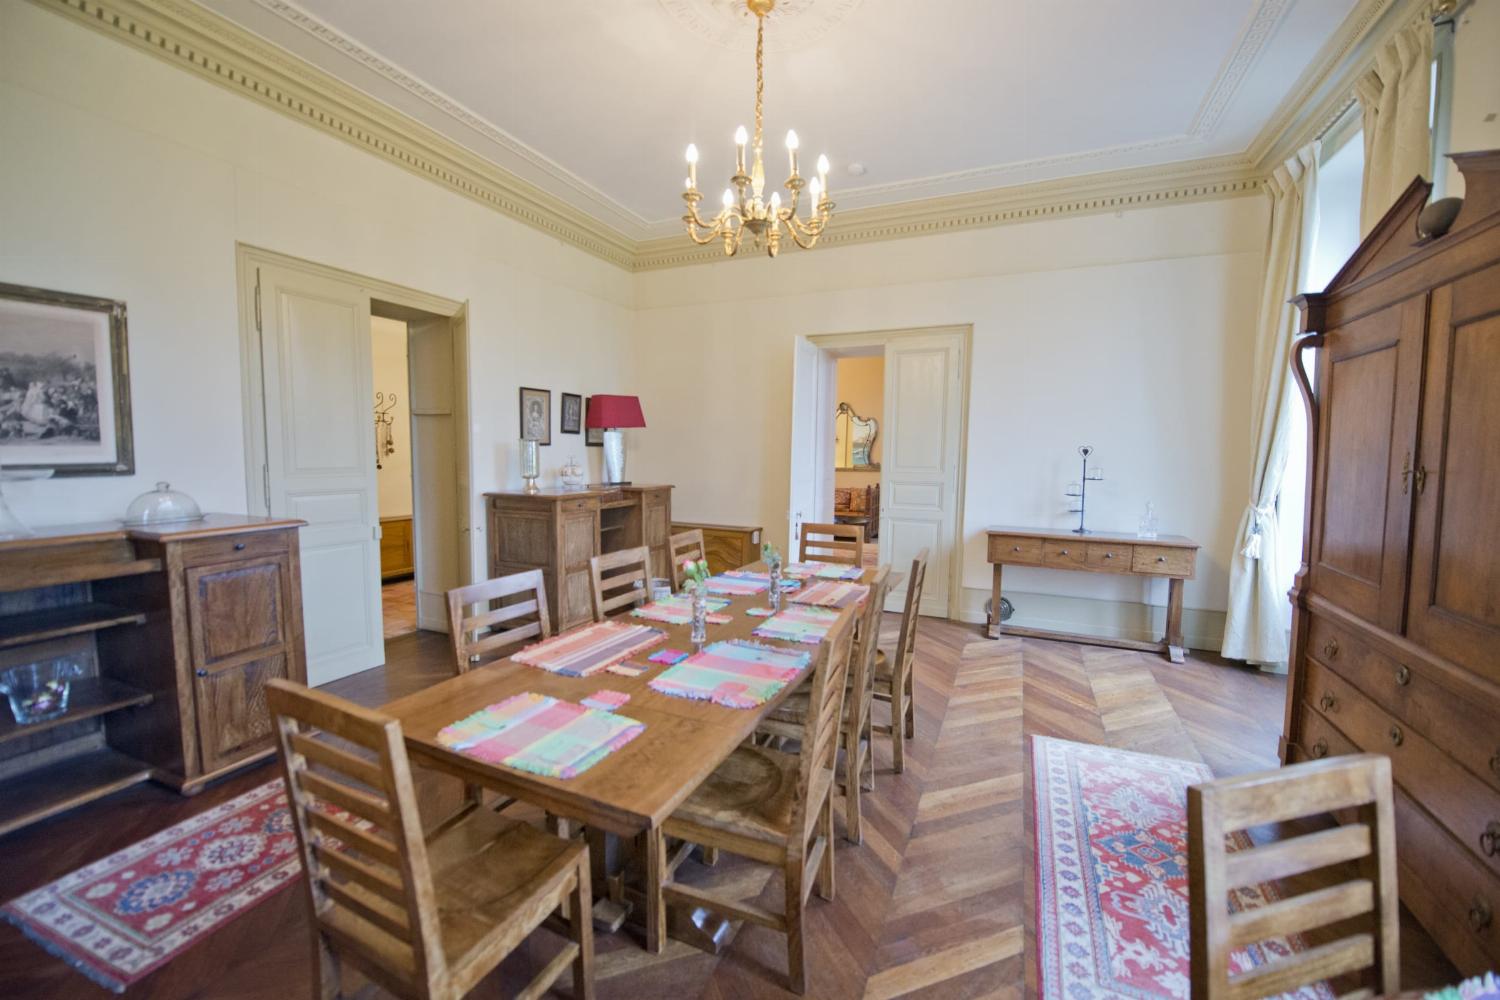 Dining room | Rental château in Loire